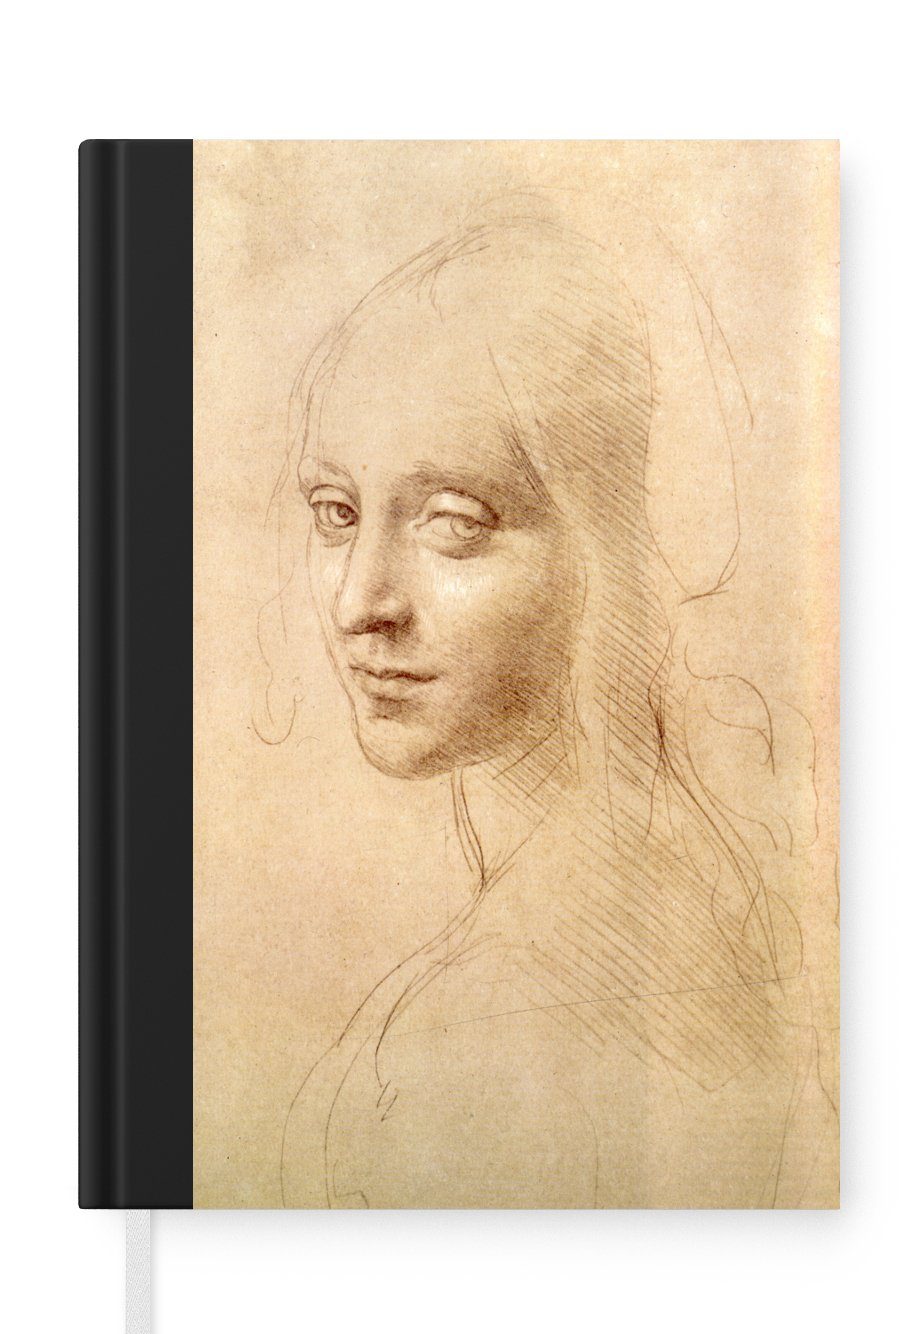 MuchoWow Notizbuch Skizze - Leonardo da Vinci, Journal, Merkzettel, Tagebuch, Notizheft, A5, 98 Seiten, Haushaltsbuch